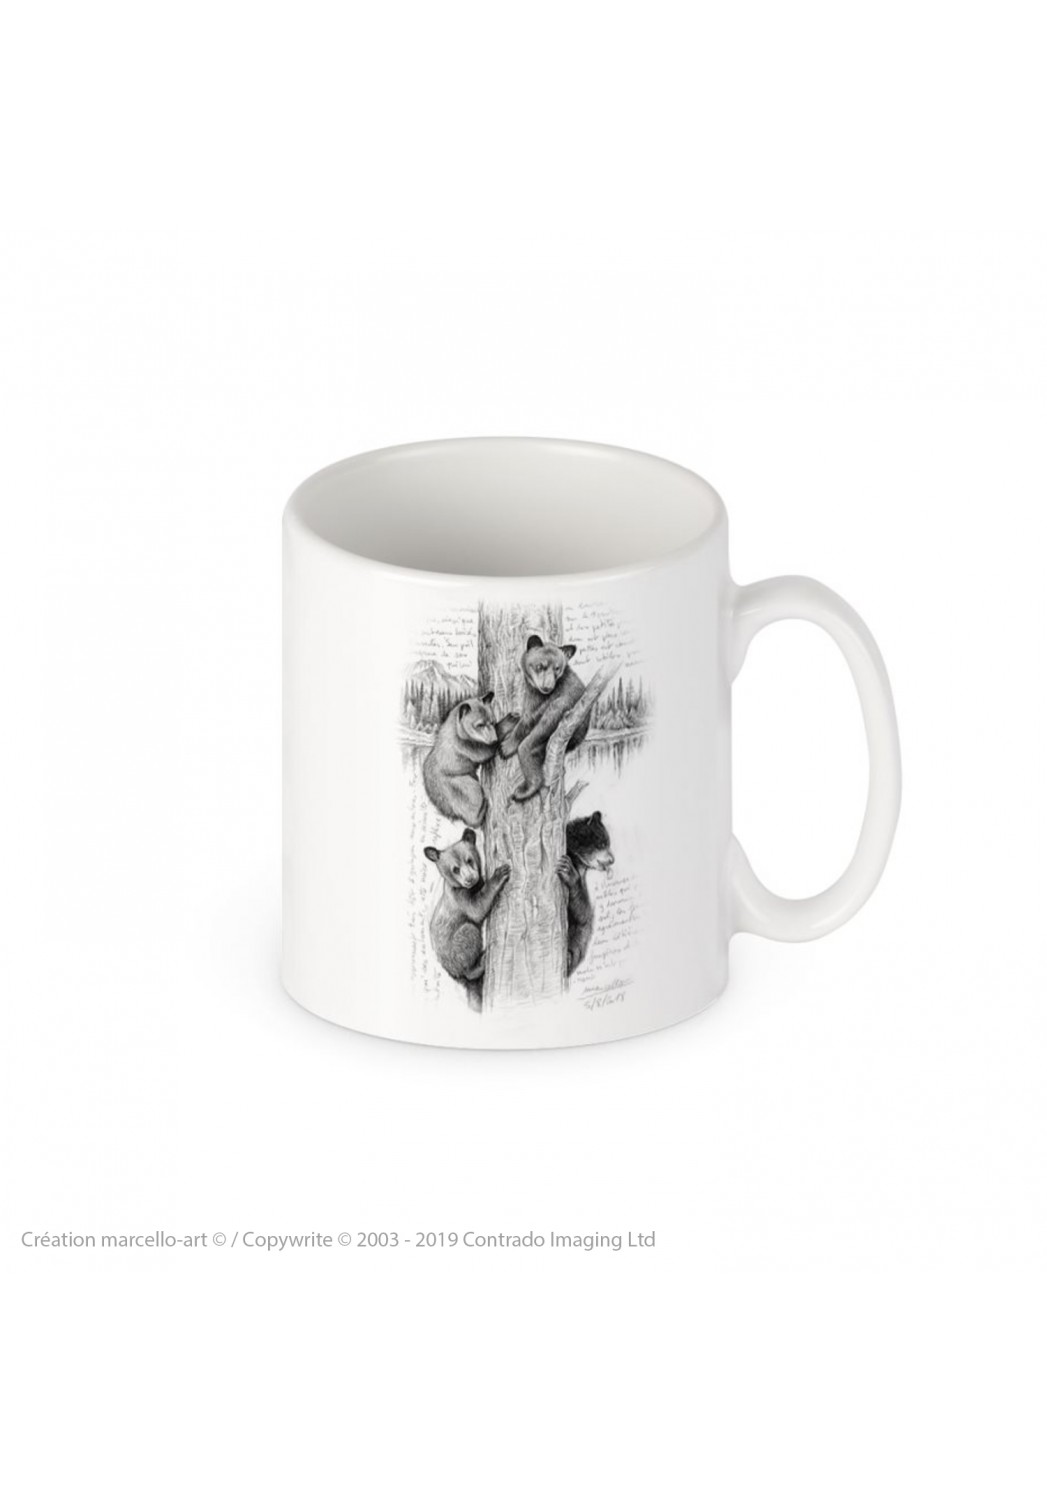 Marcello-art: Decoration accessoiries Porcelain mug 382 little bears